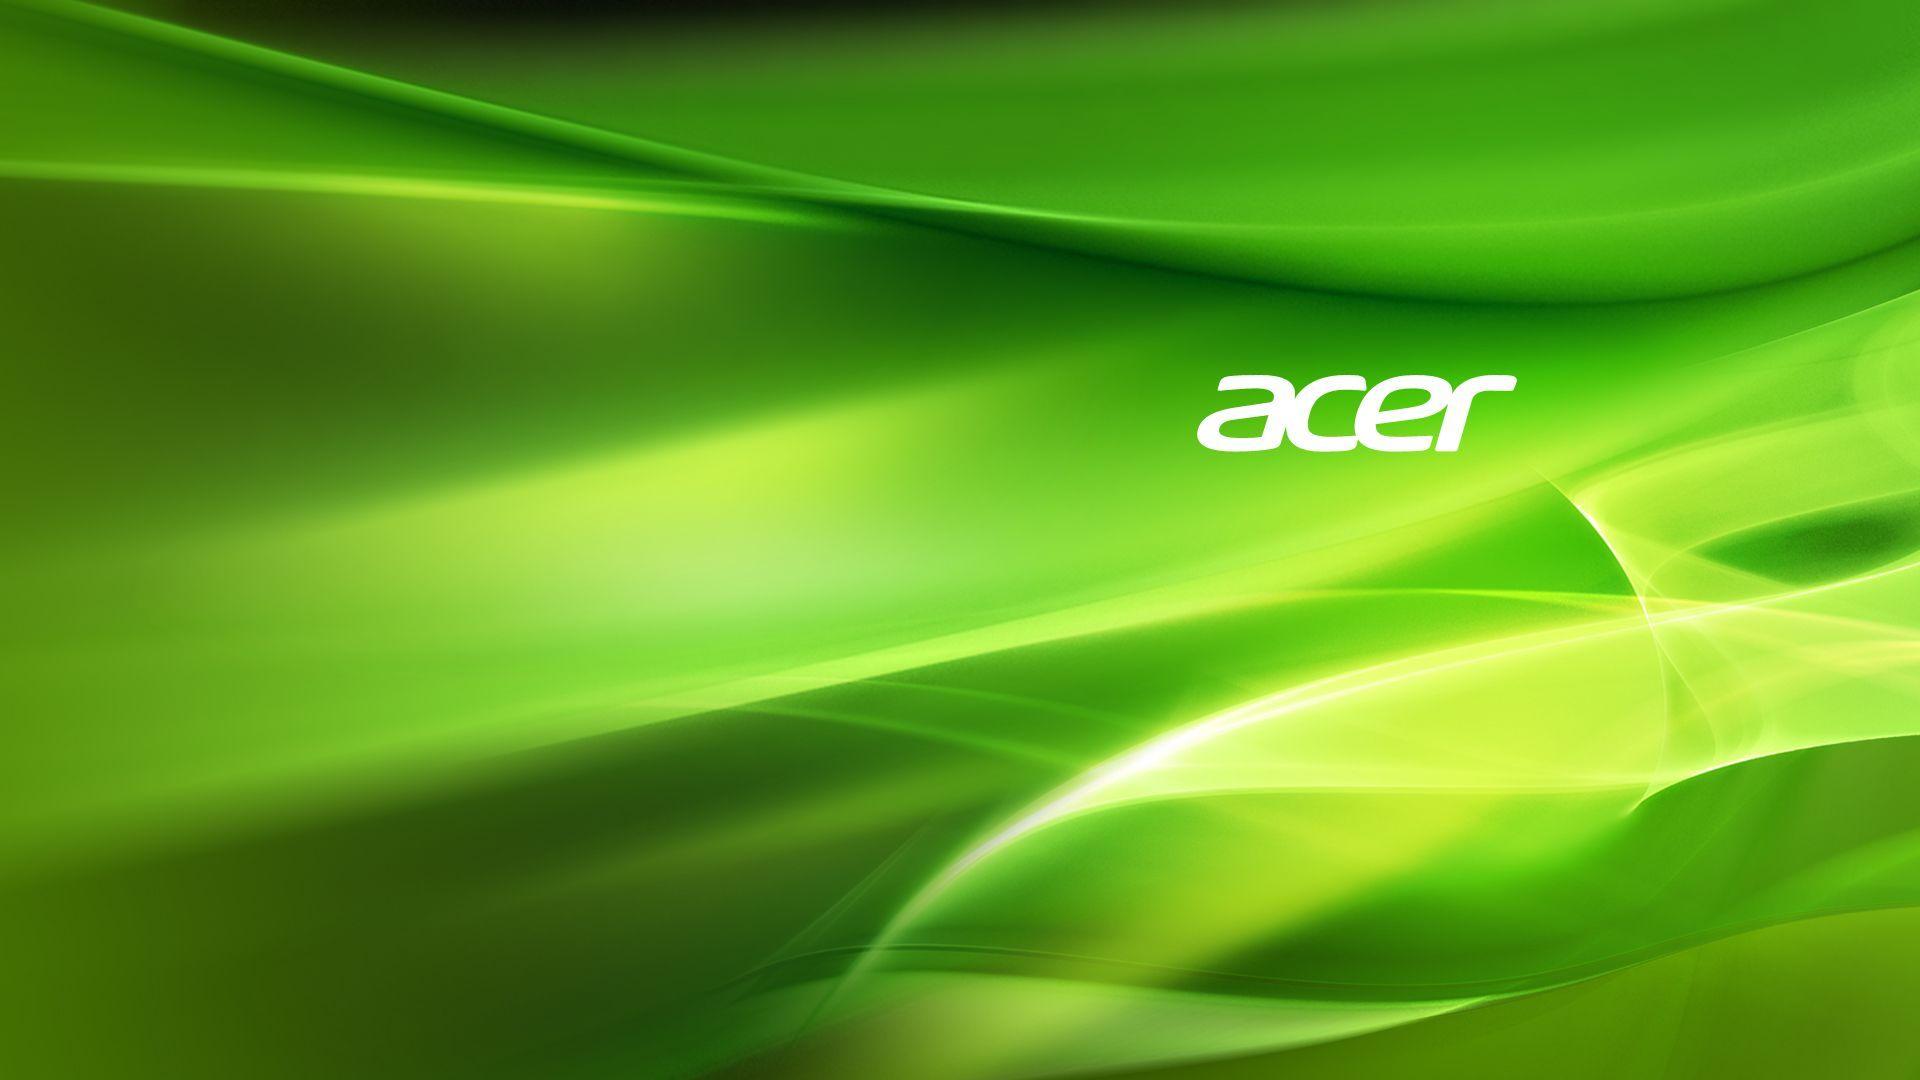 Acer Desktop Background Wallpaper. HD Wallpaper. Acer